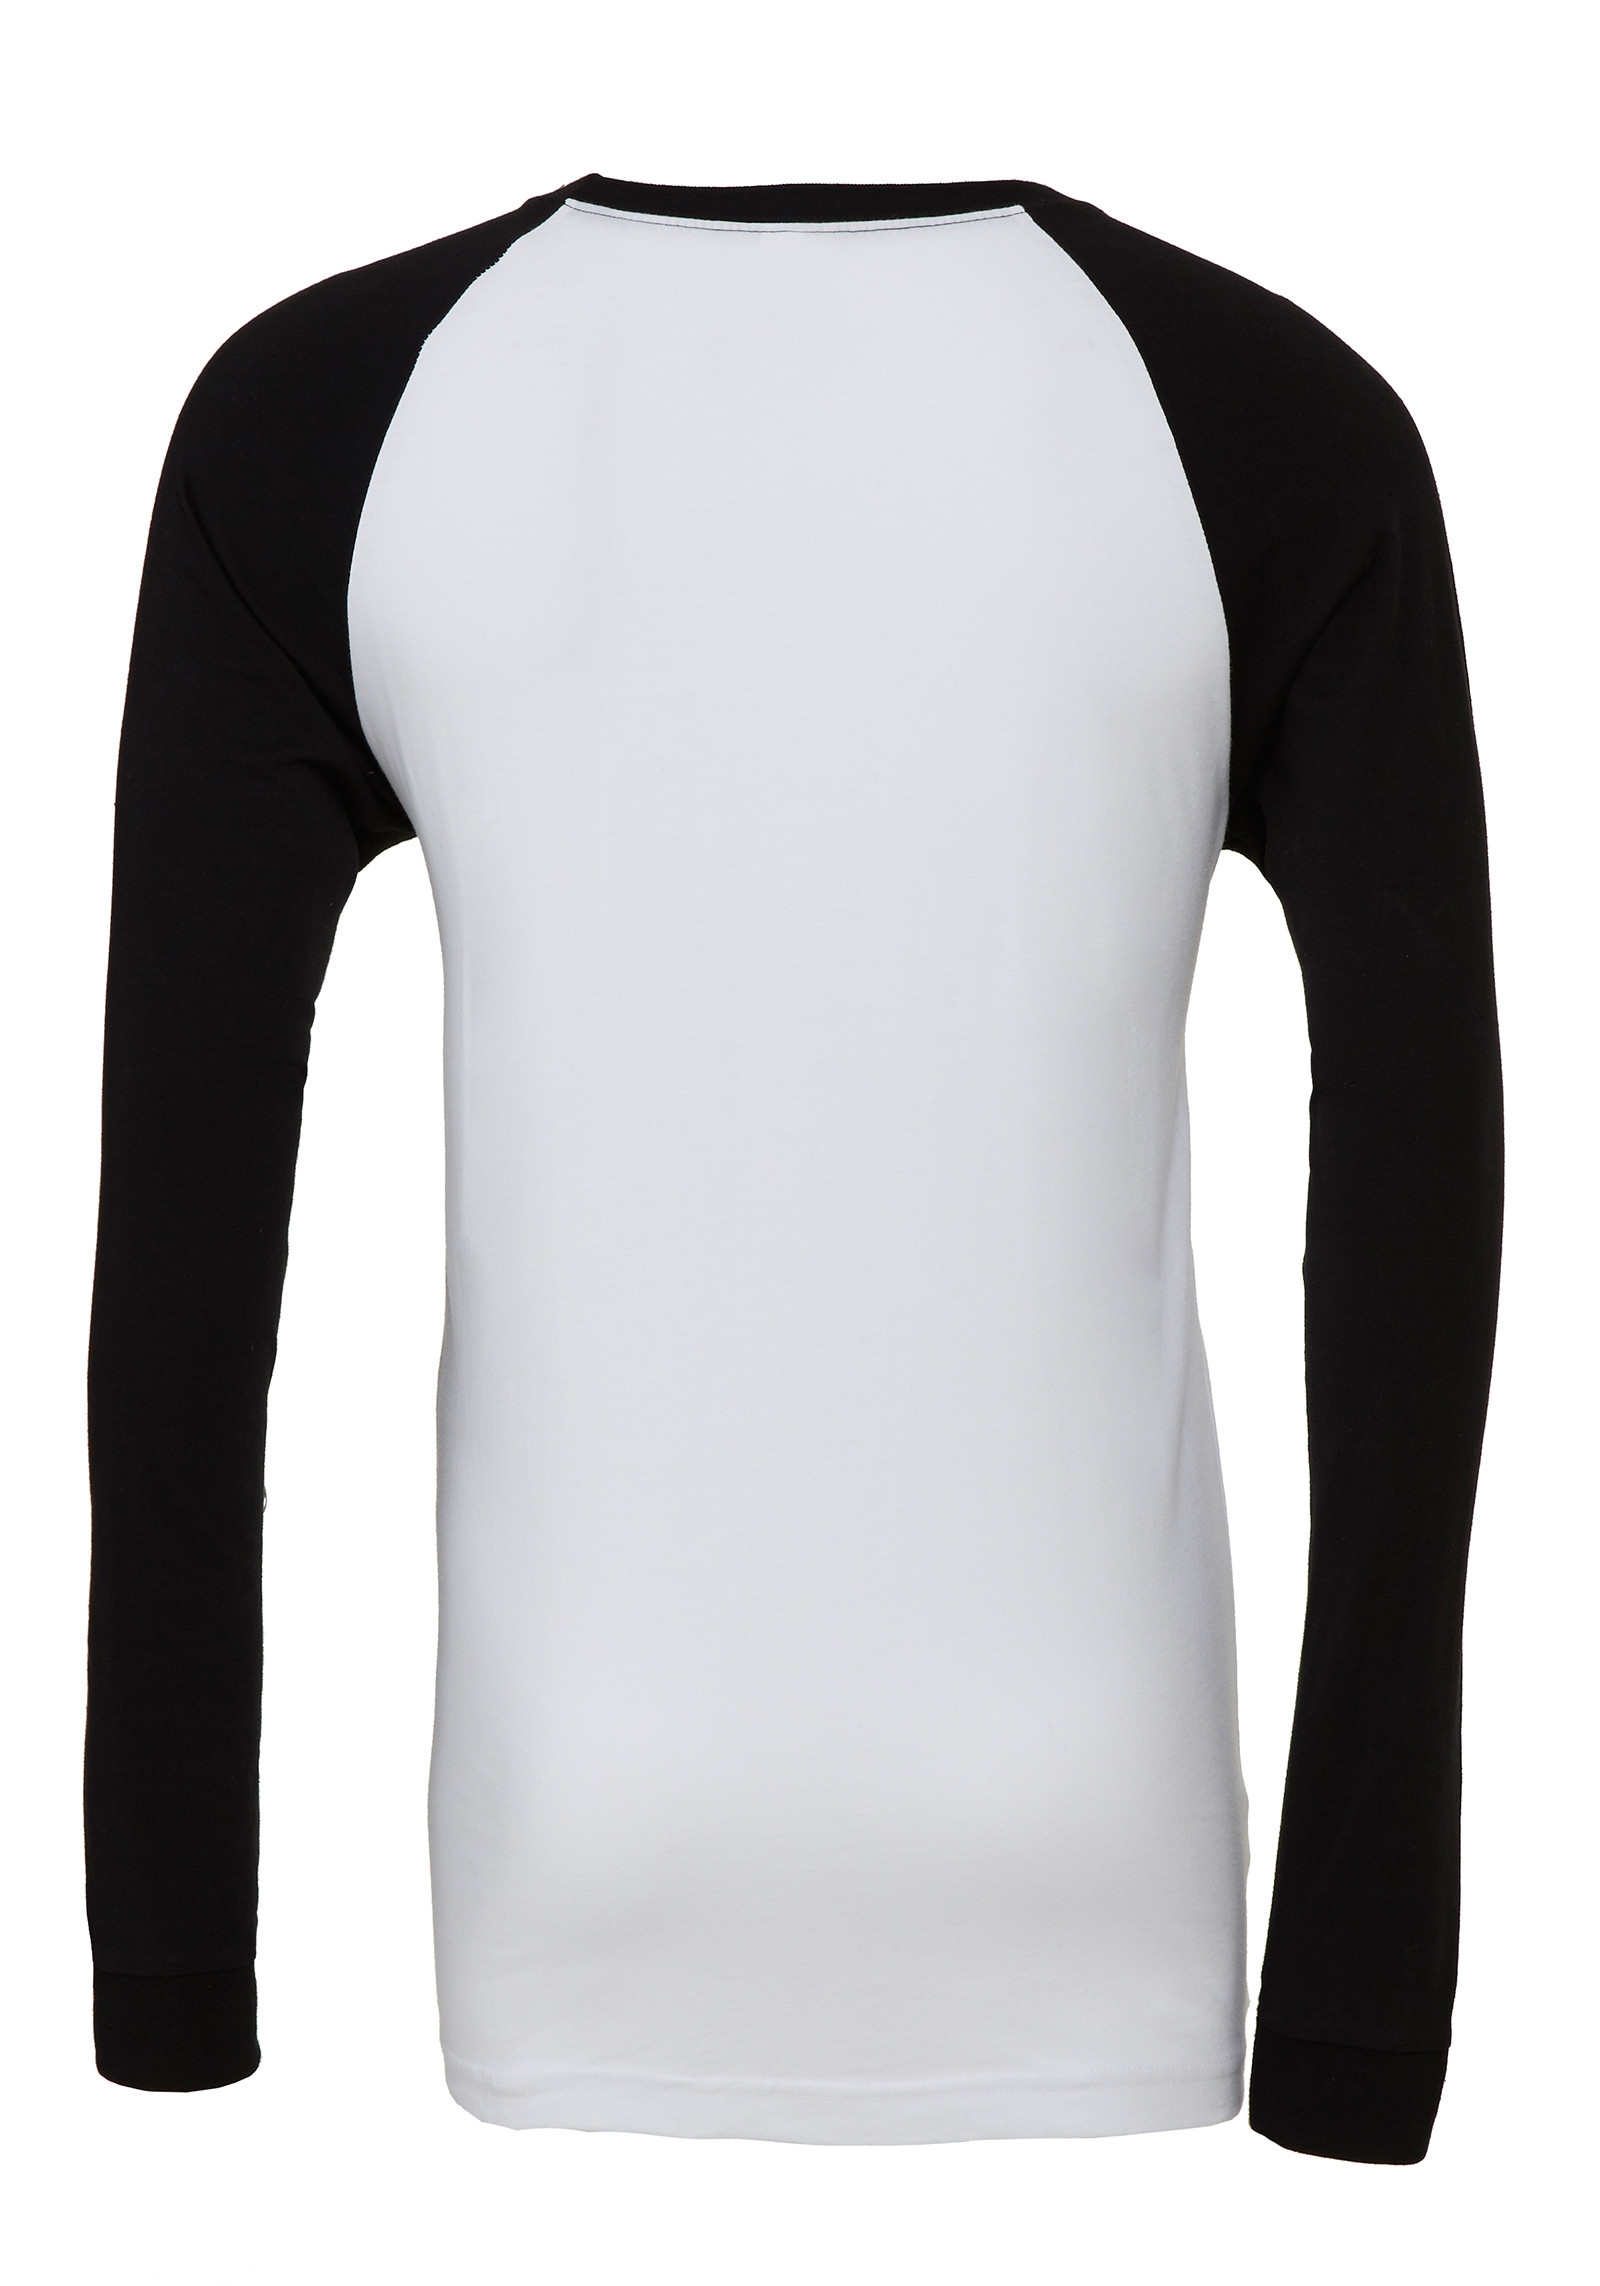 kortademigheid Productief Versterken Personalized Jersey Long Sleeve Baseball Tee Shirt: HansonEllis.com